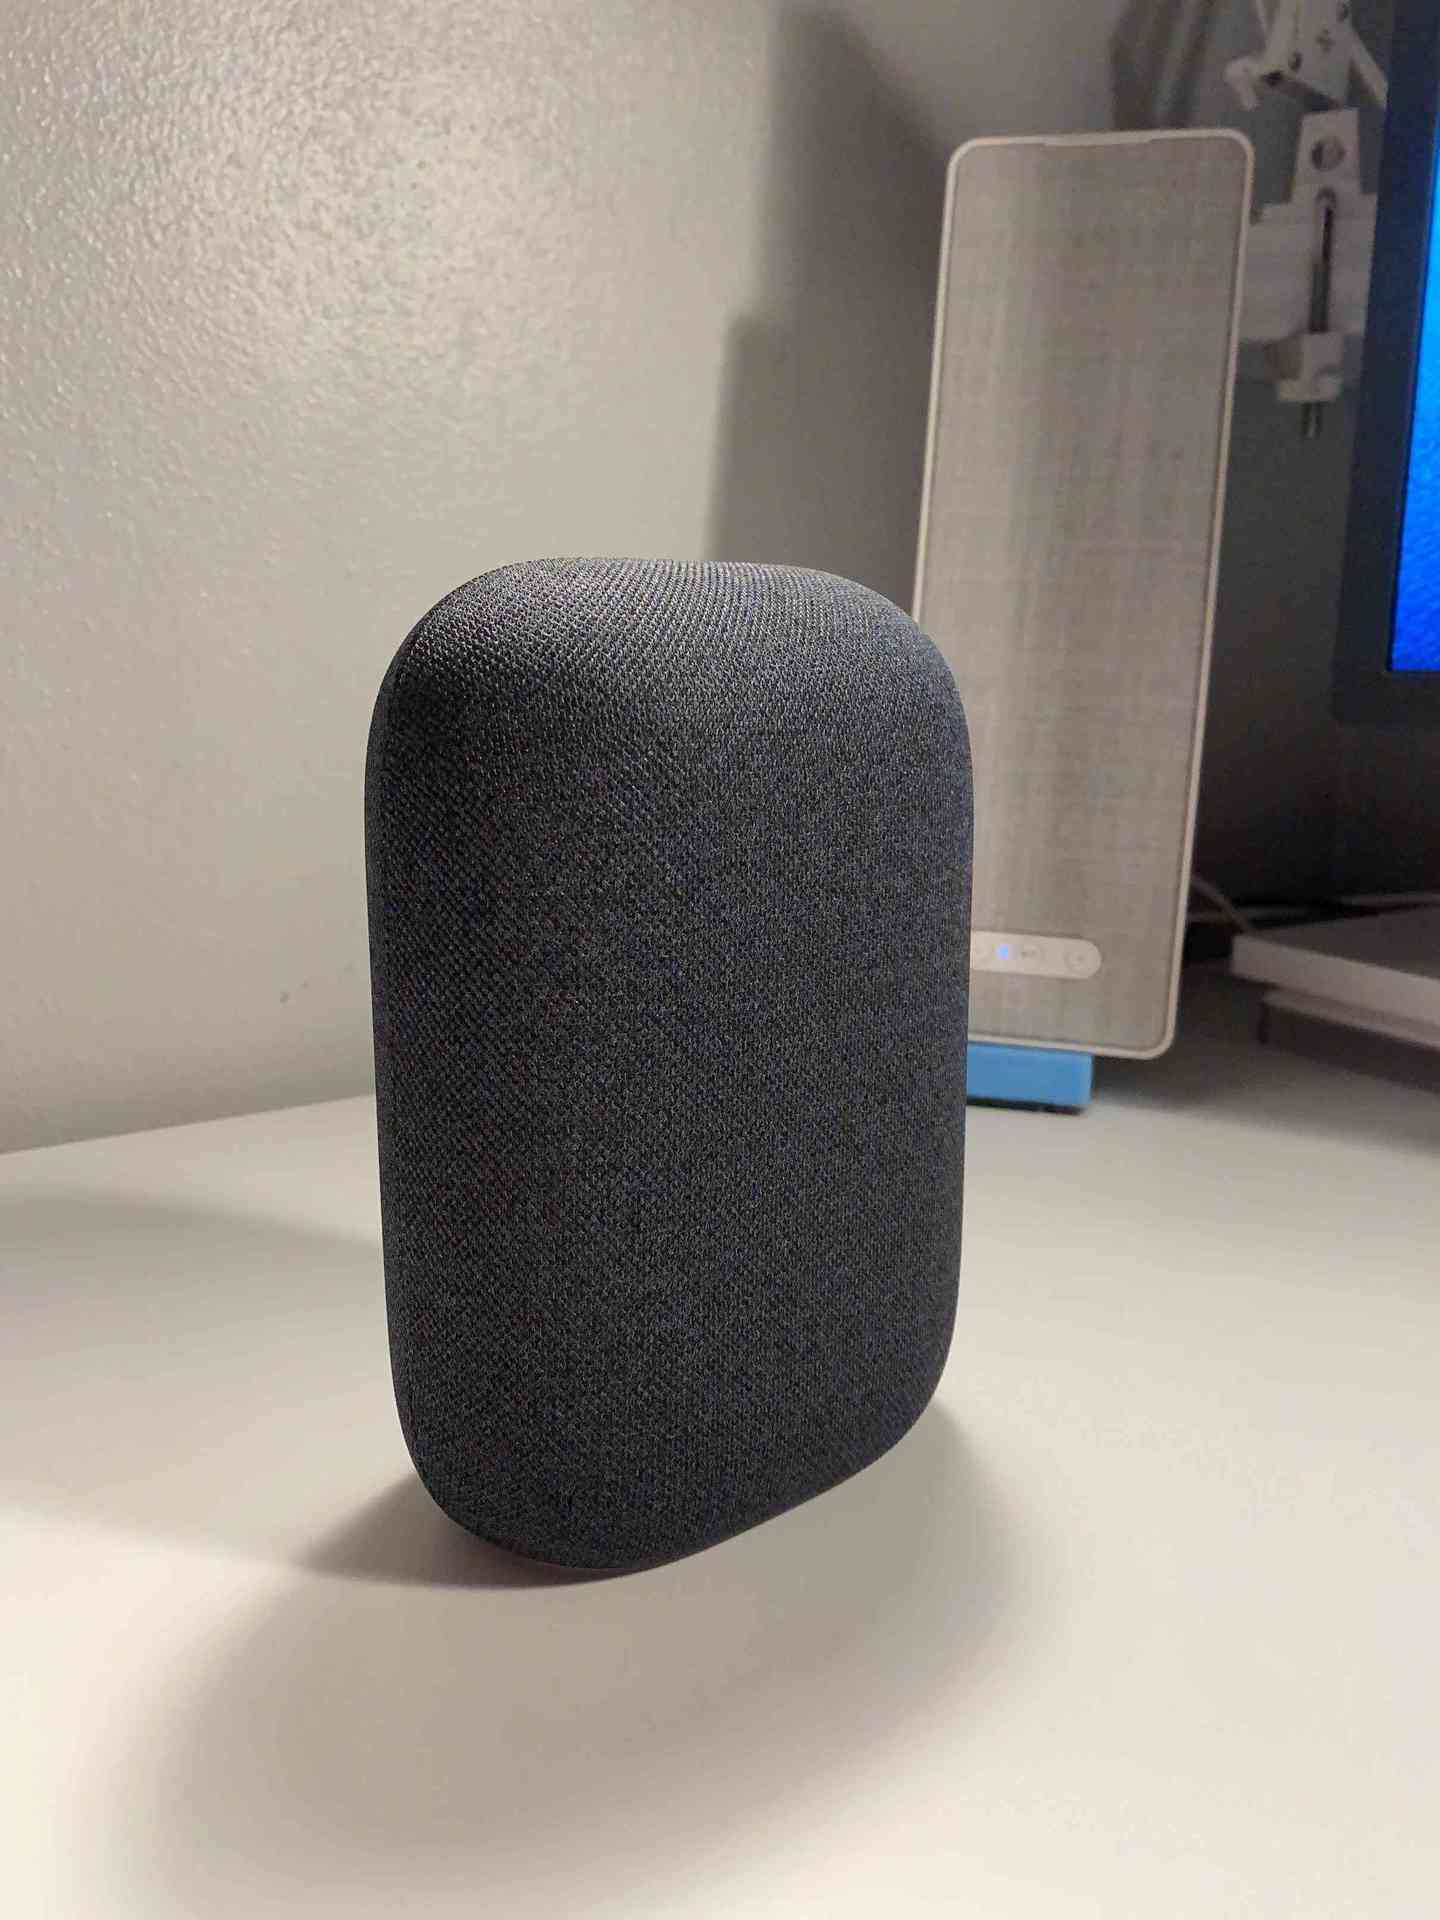 Google's Nest Audio smart speaker detailed in early unboxing shots